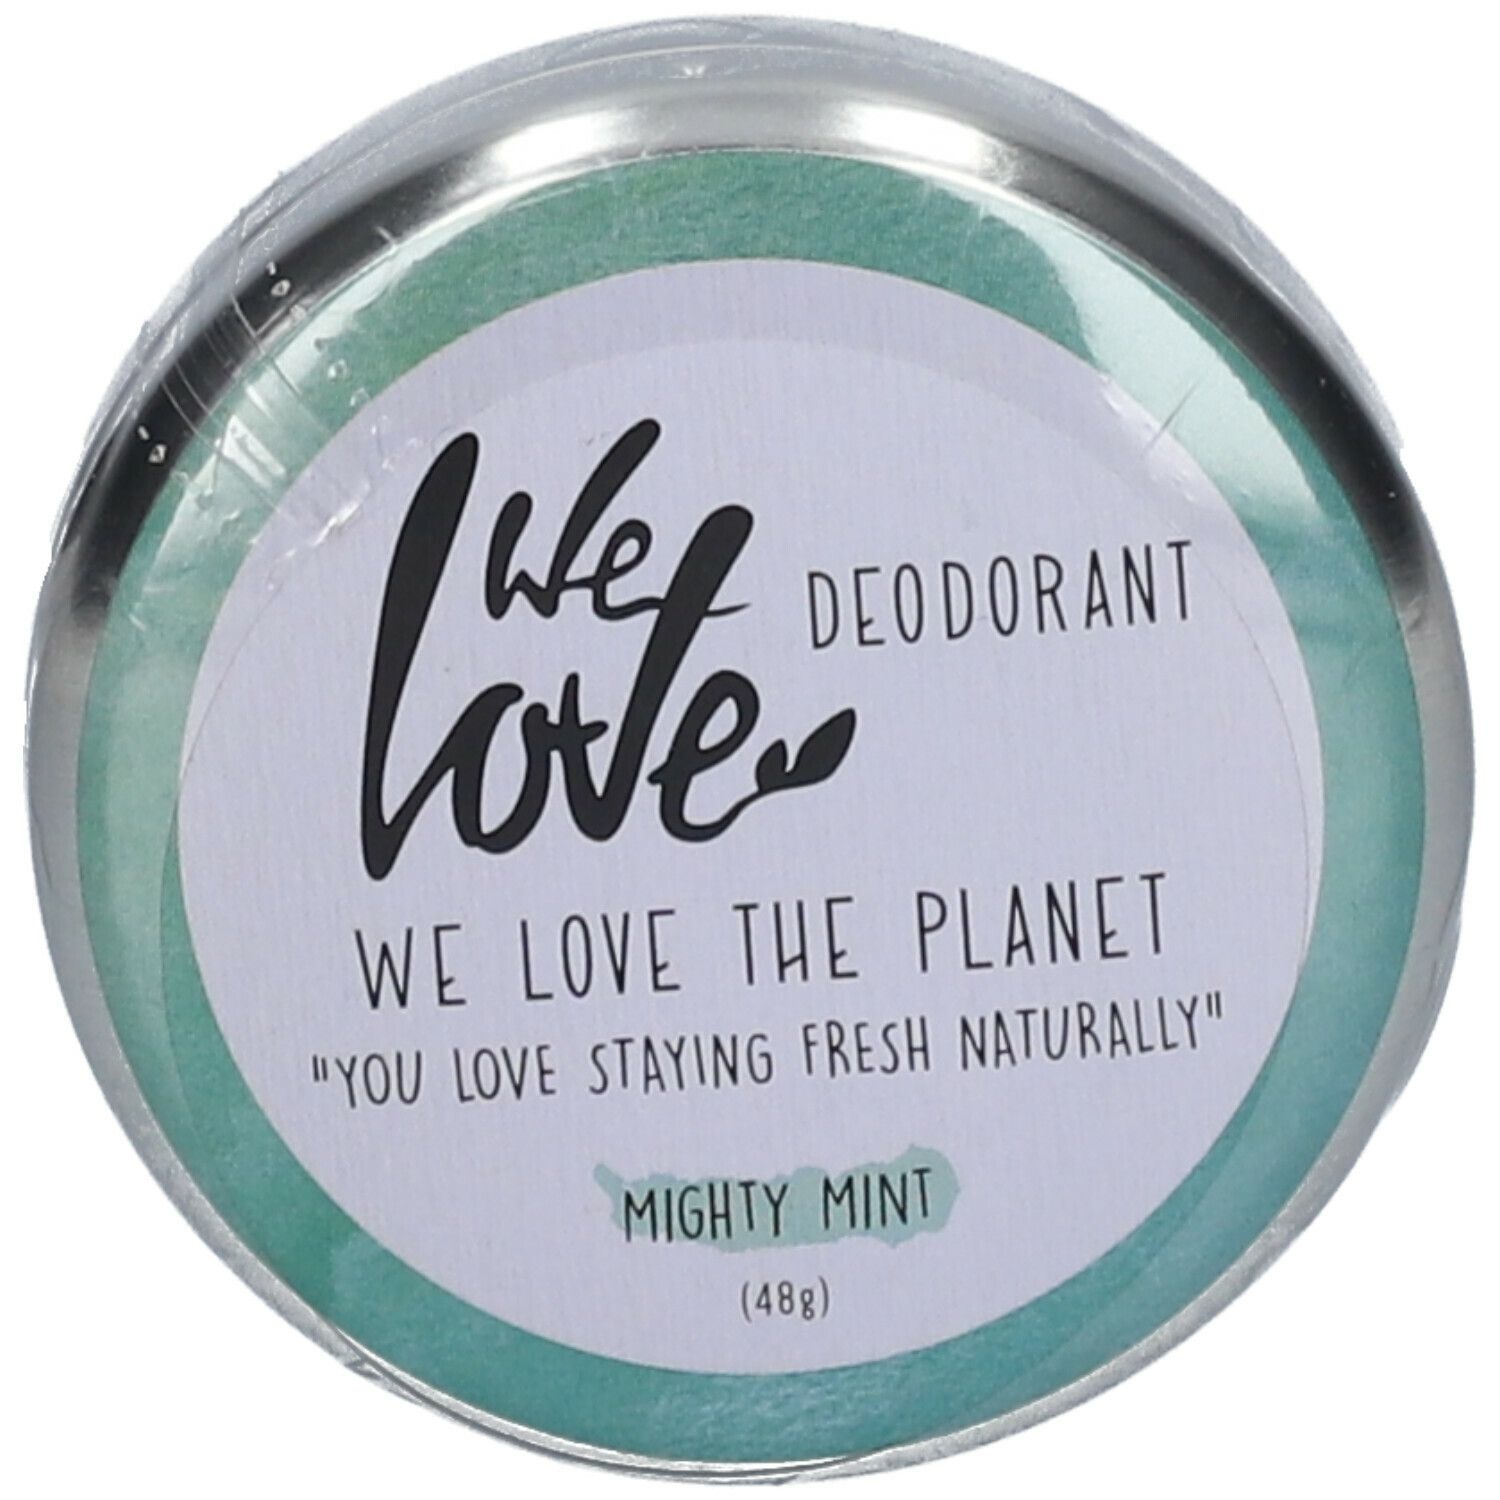 We love Deodorant Mighty Mint